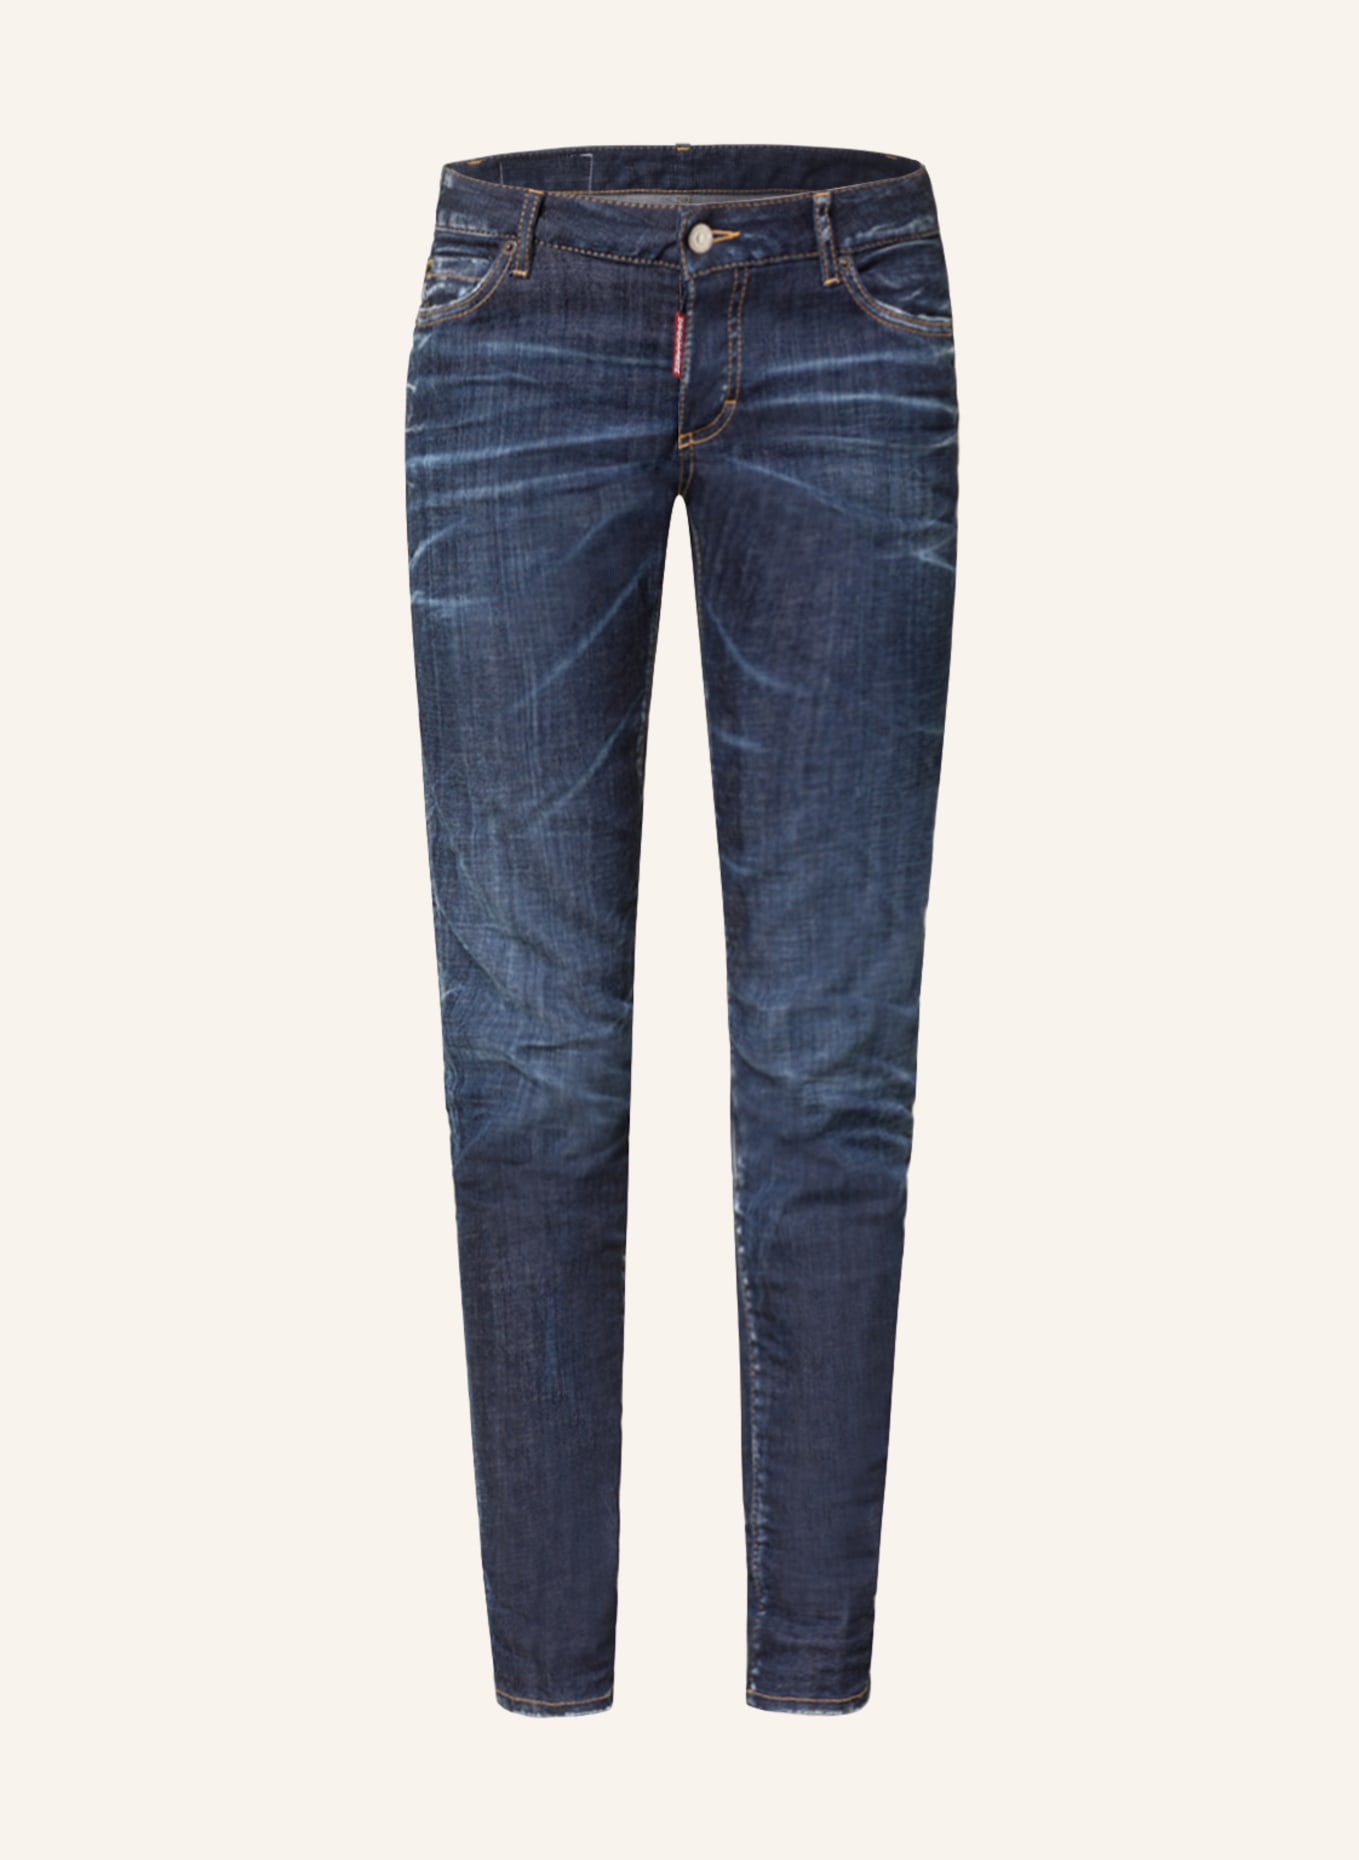 DSQUARED2 Jeans JENNIFER, Farbe: 470 BLUE NAVY (Bild 1)